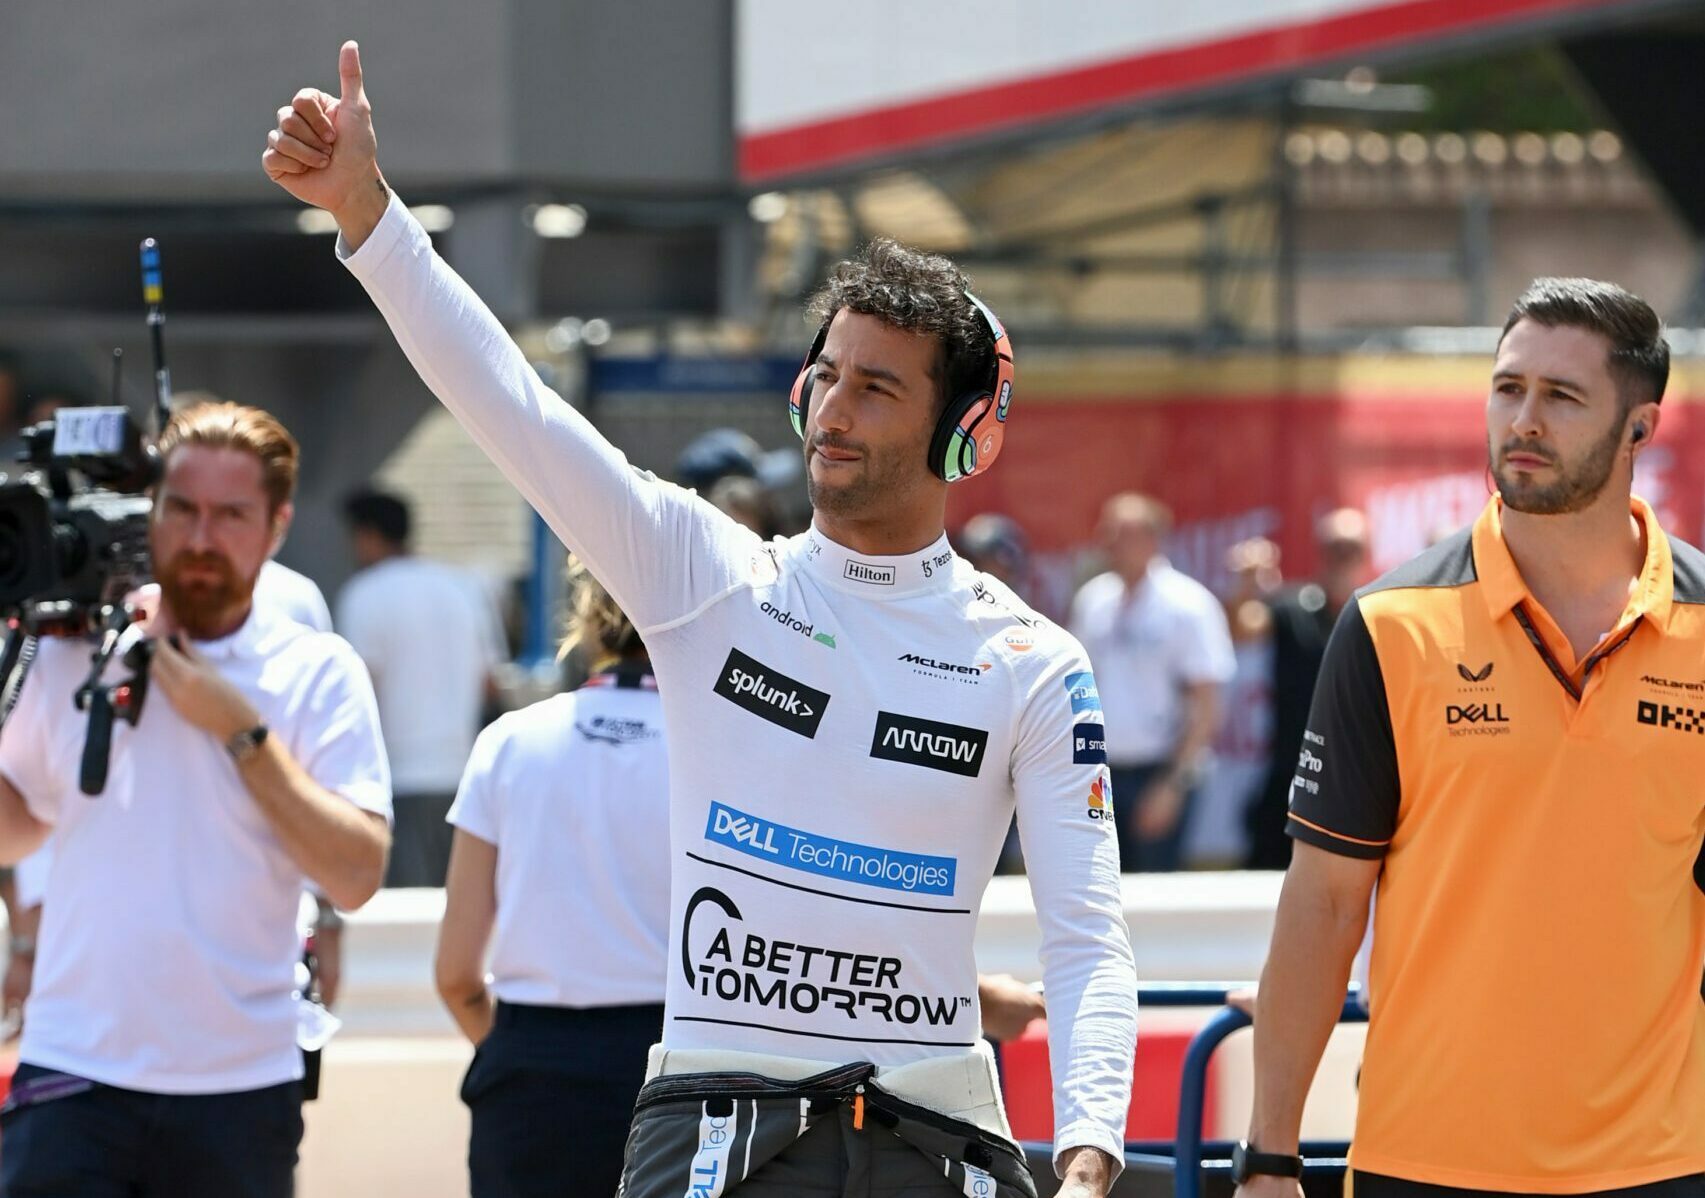 F1 - Ralf Schumacher doute que Ricciardo retrouve un baquet si McLaren le remplace